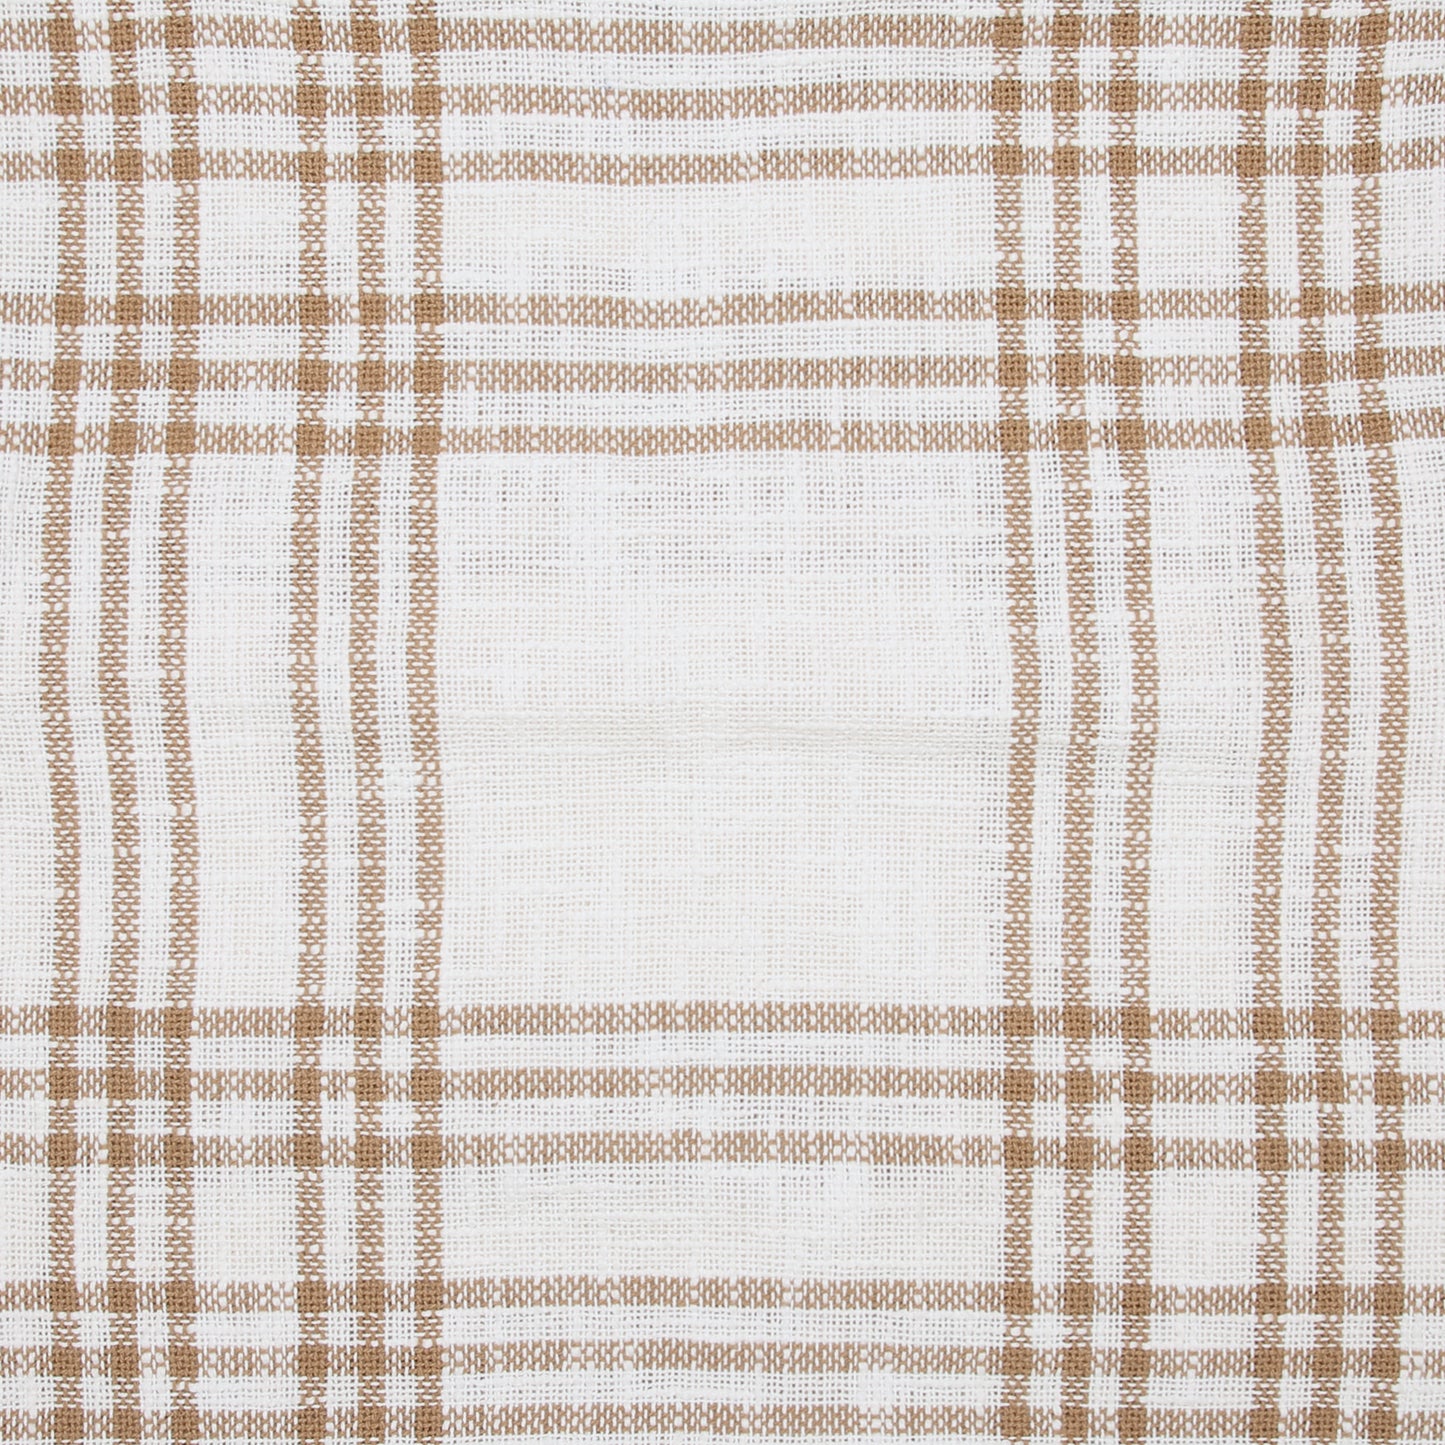 80539-Wheat-Plaid-Fabric-Pillow-18x18-image-6